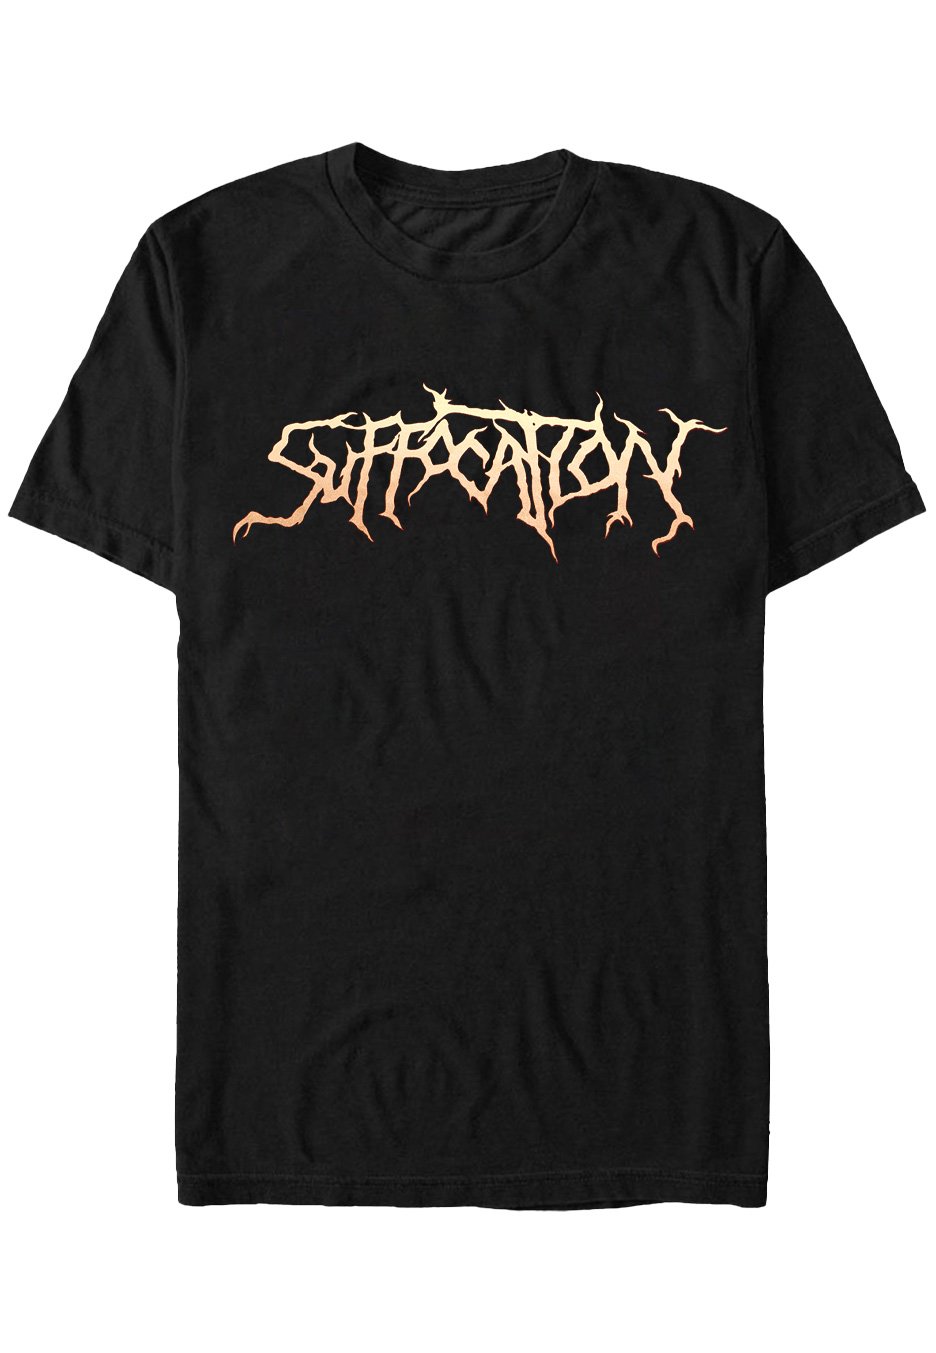 Suffocation - Hymns Logo - T-Shirt